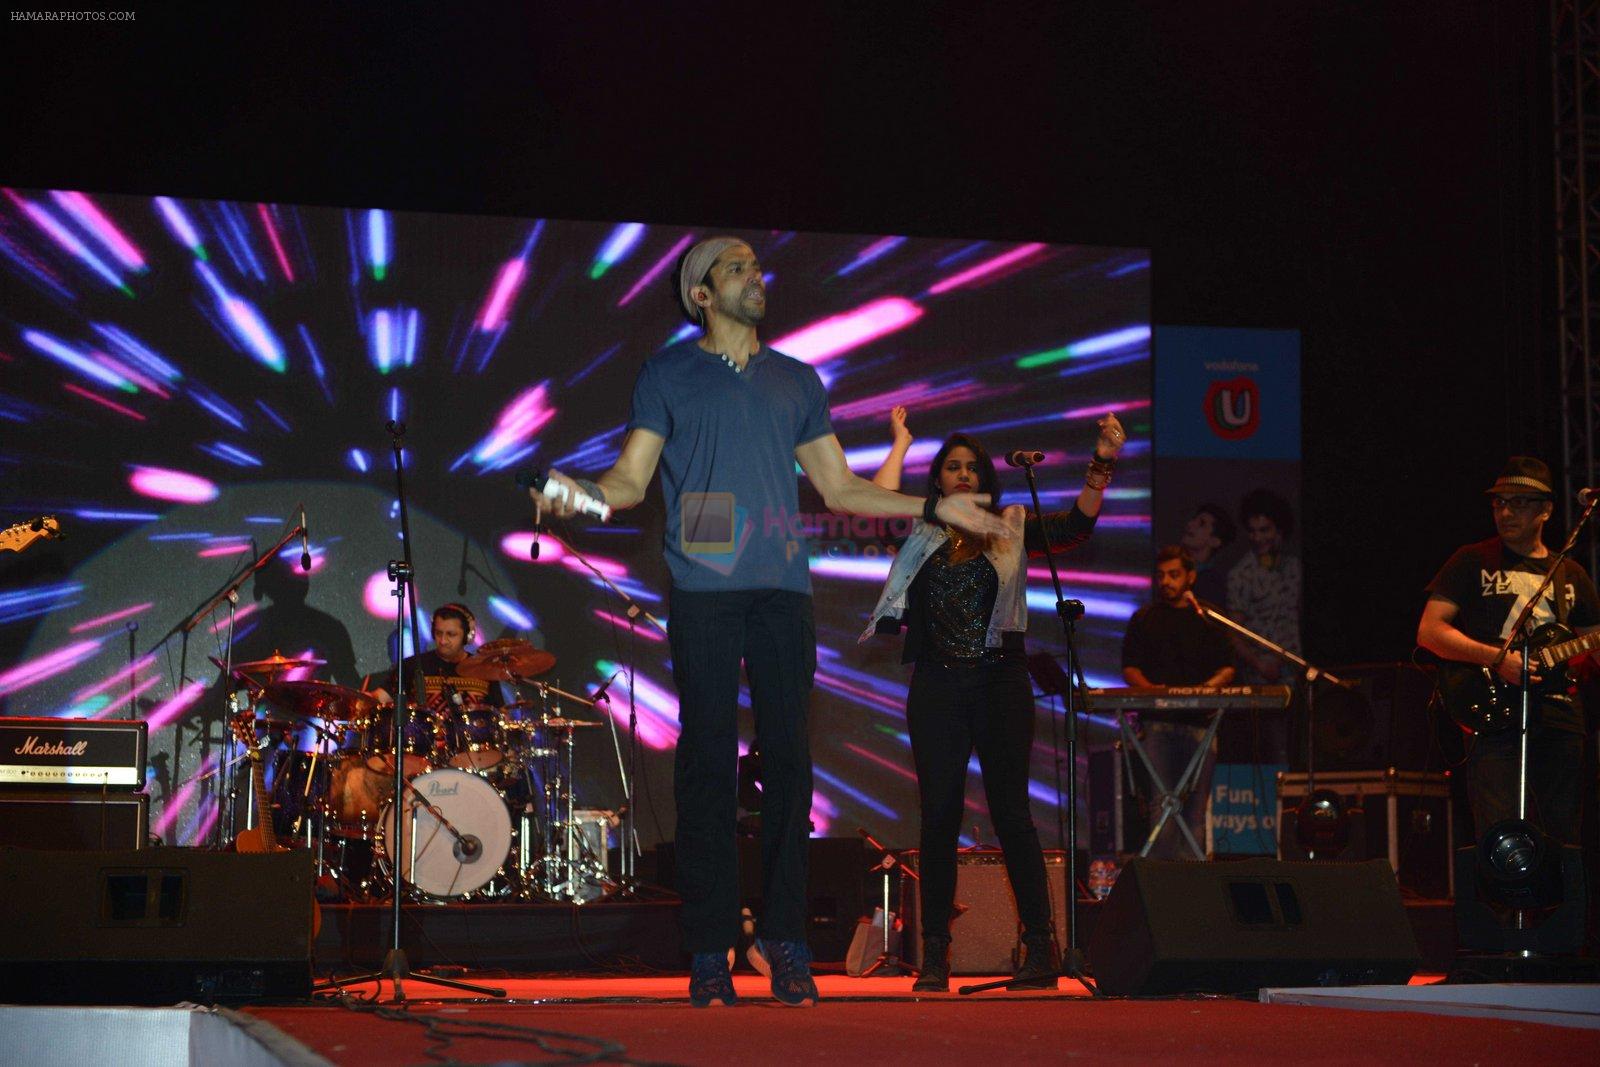 Farhan Akhtar at Rock on 2 concert in Delhi on 8th Nov 2016